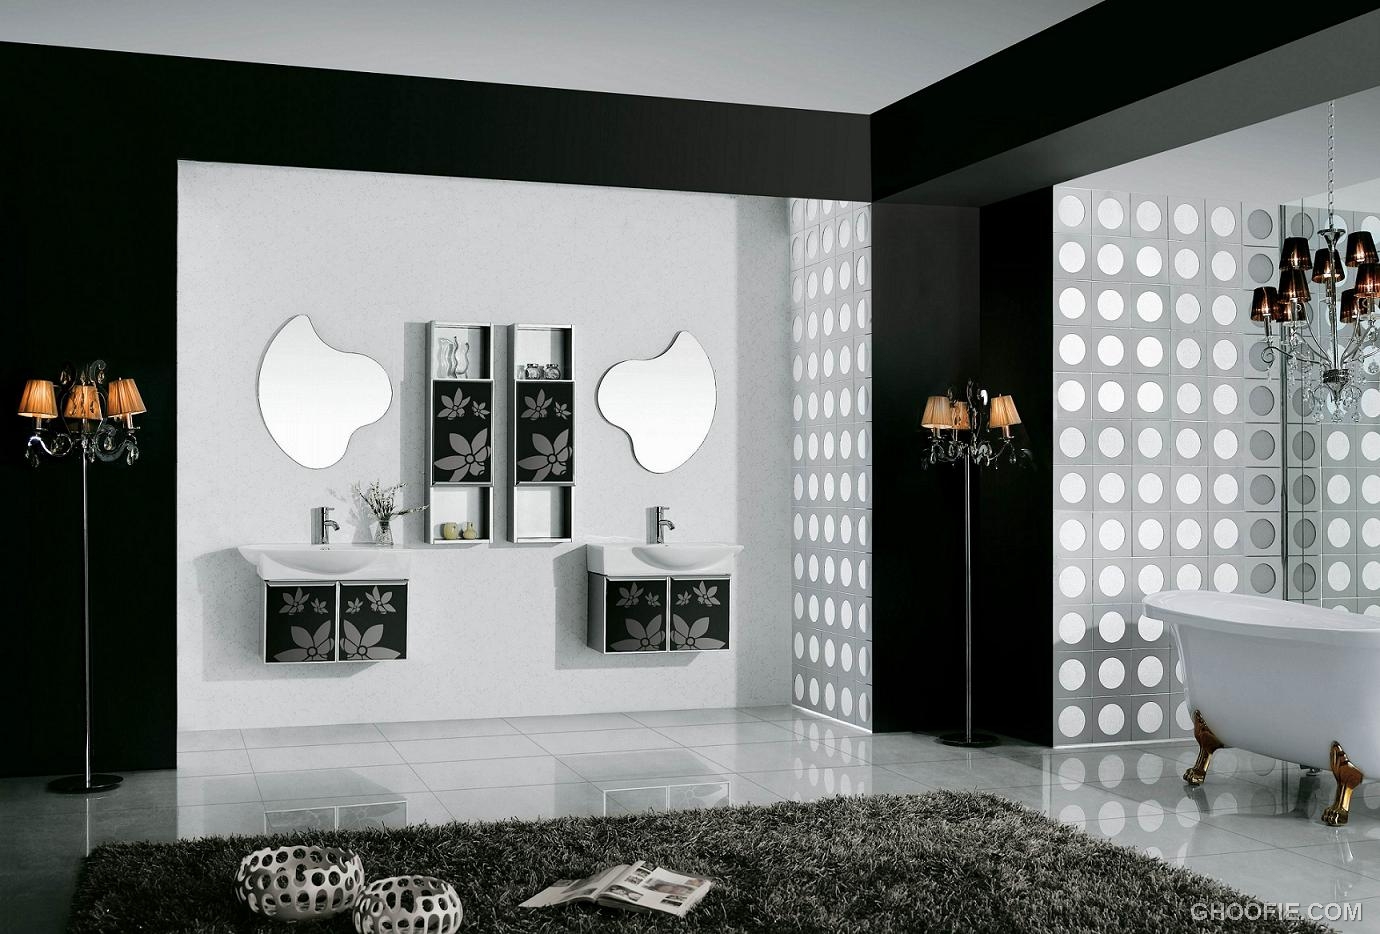 Inspirational Design - black and white bathroom